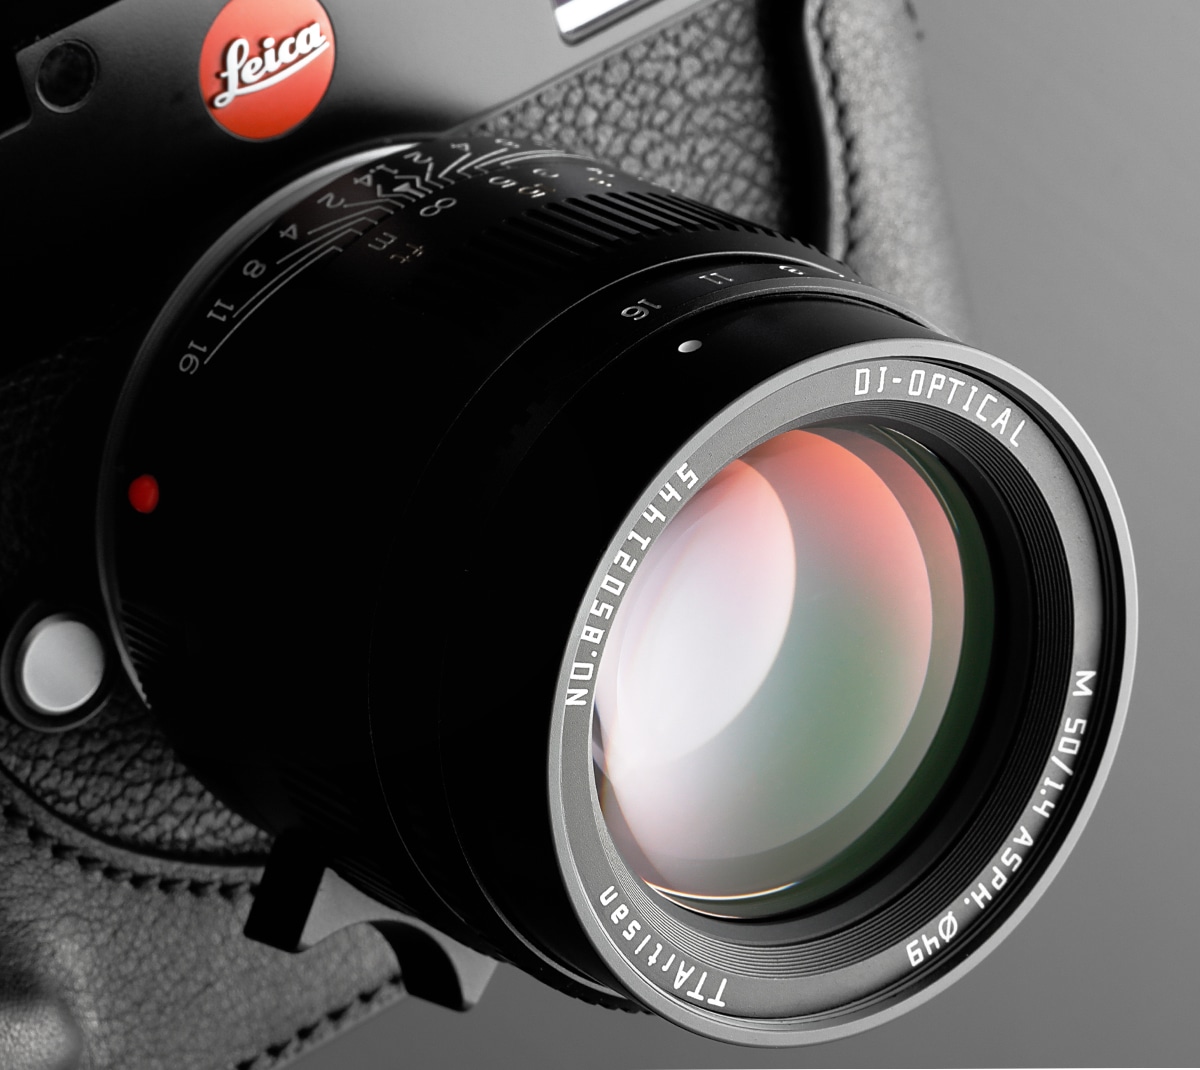 Leica銘匠光学 TTArtisan 50mm f/1.4 ASPH ライカMマウント